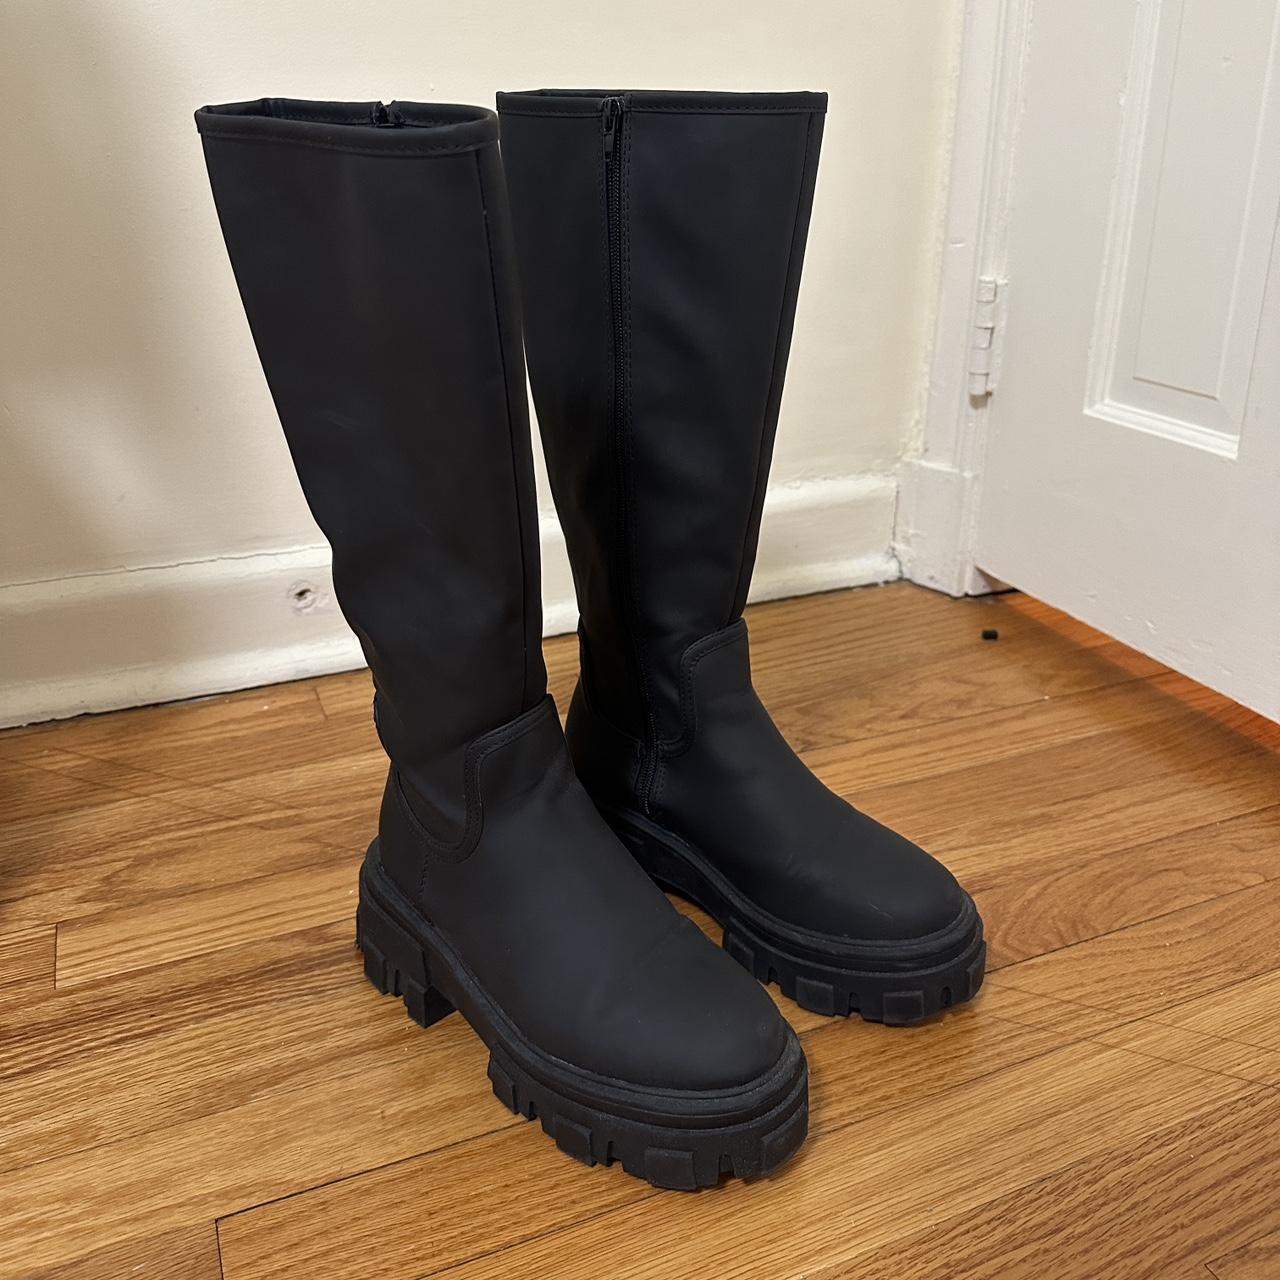 ASOS Women's Black Boots